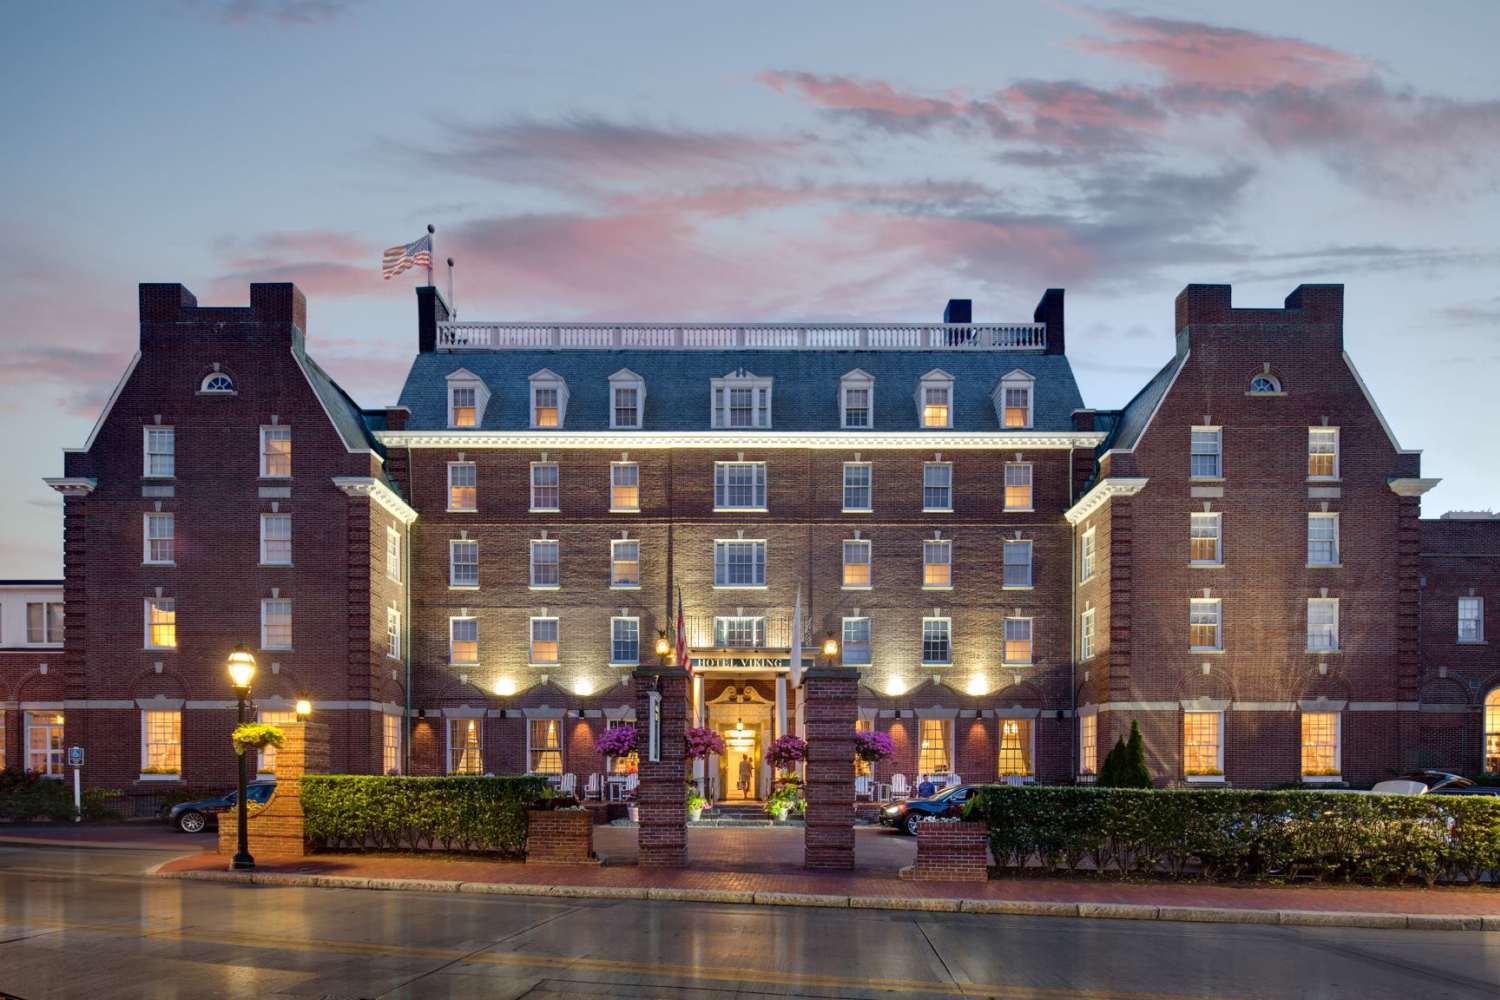 Hotel Viking Newport, Rhode Island - United States Of America